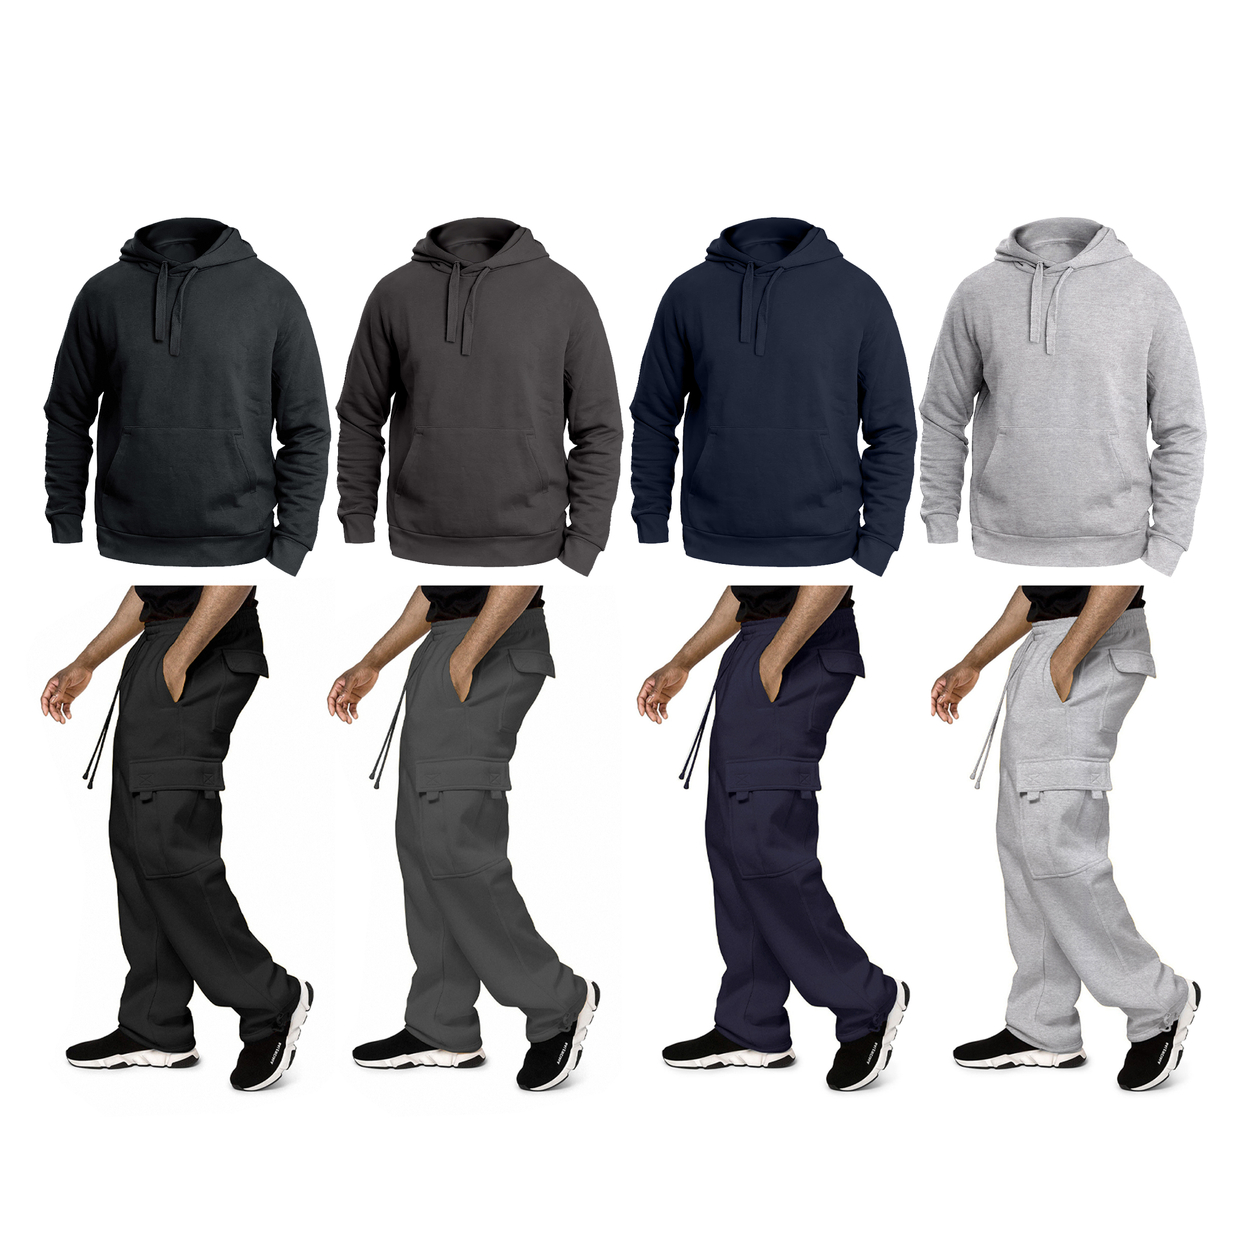 2-Pack: Men's Big & Tall Winter Warm Cozy Athletic Fleece Lined Multi-Pocket Cargo Sweatsuit - Charcoal, Medium